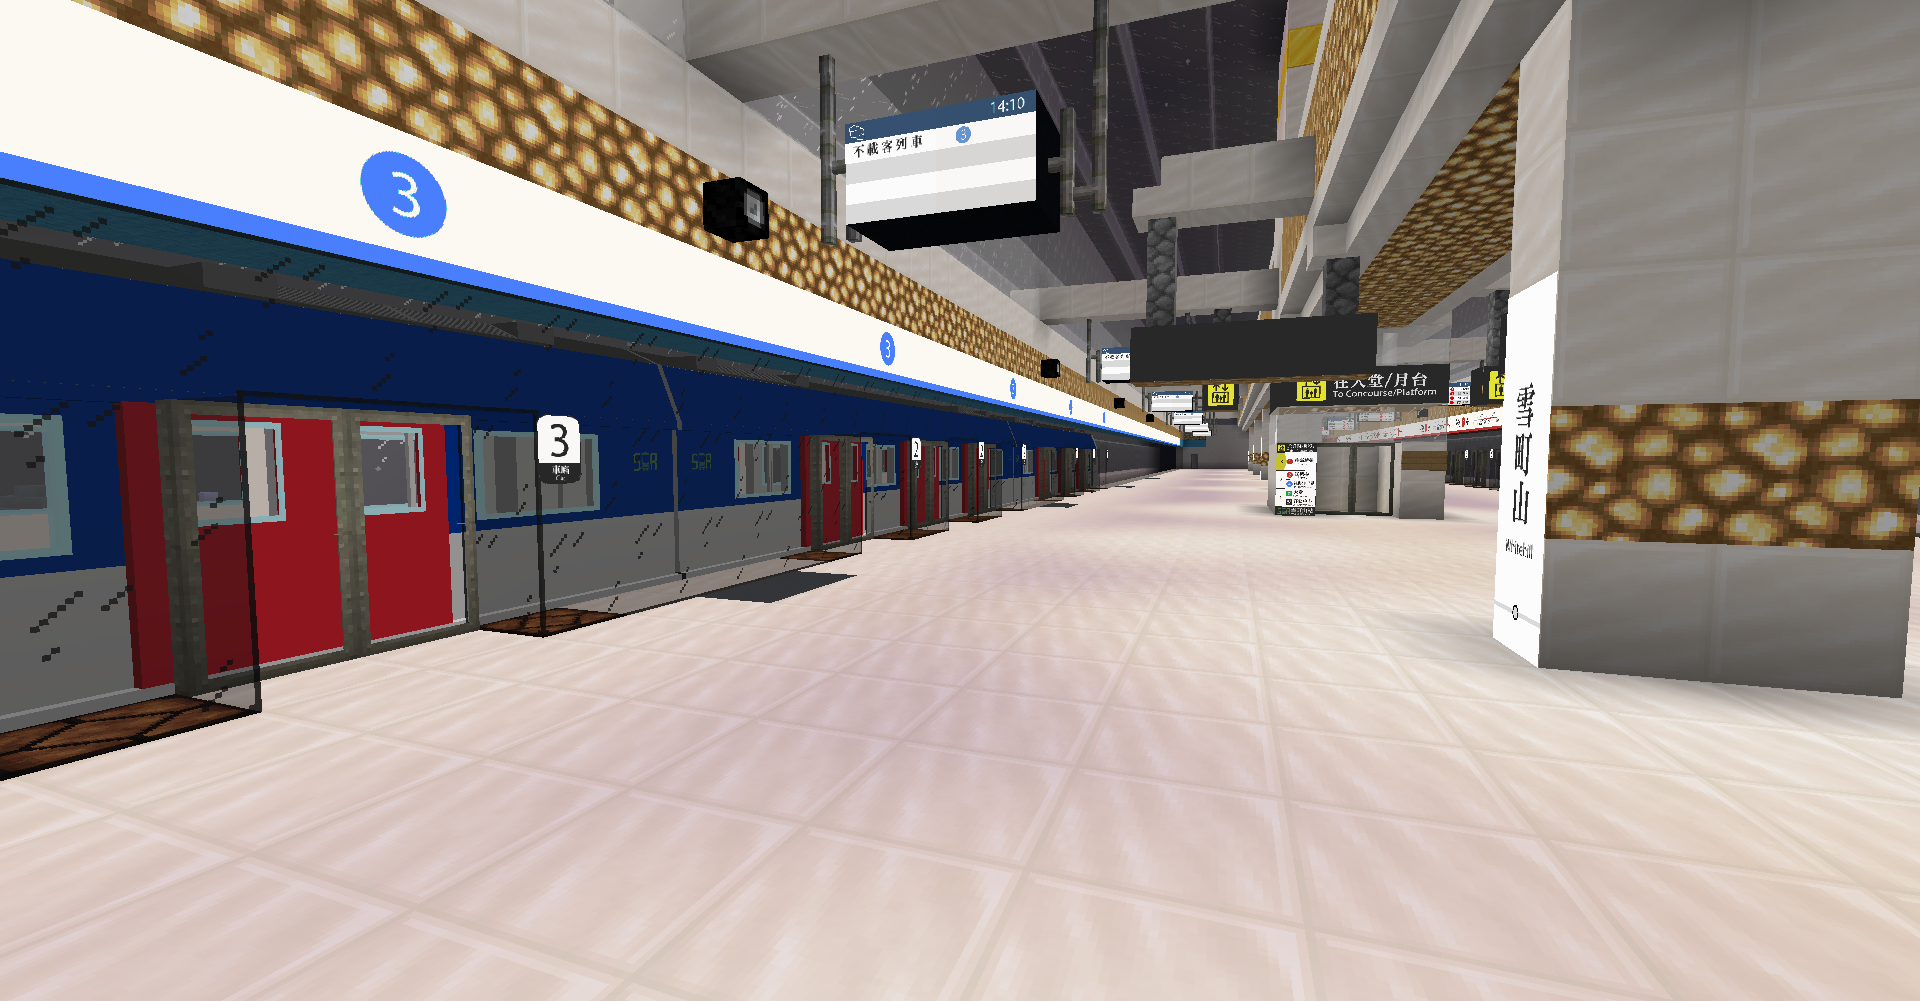 SCR Whitehill Station Platform 3